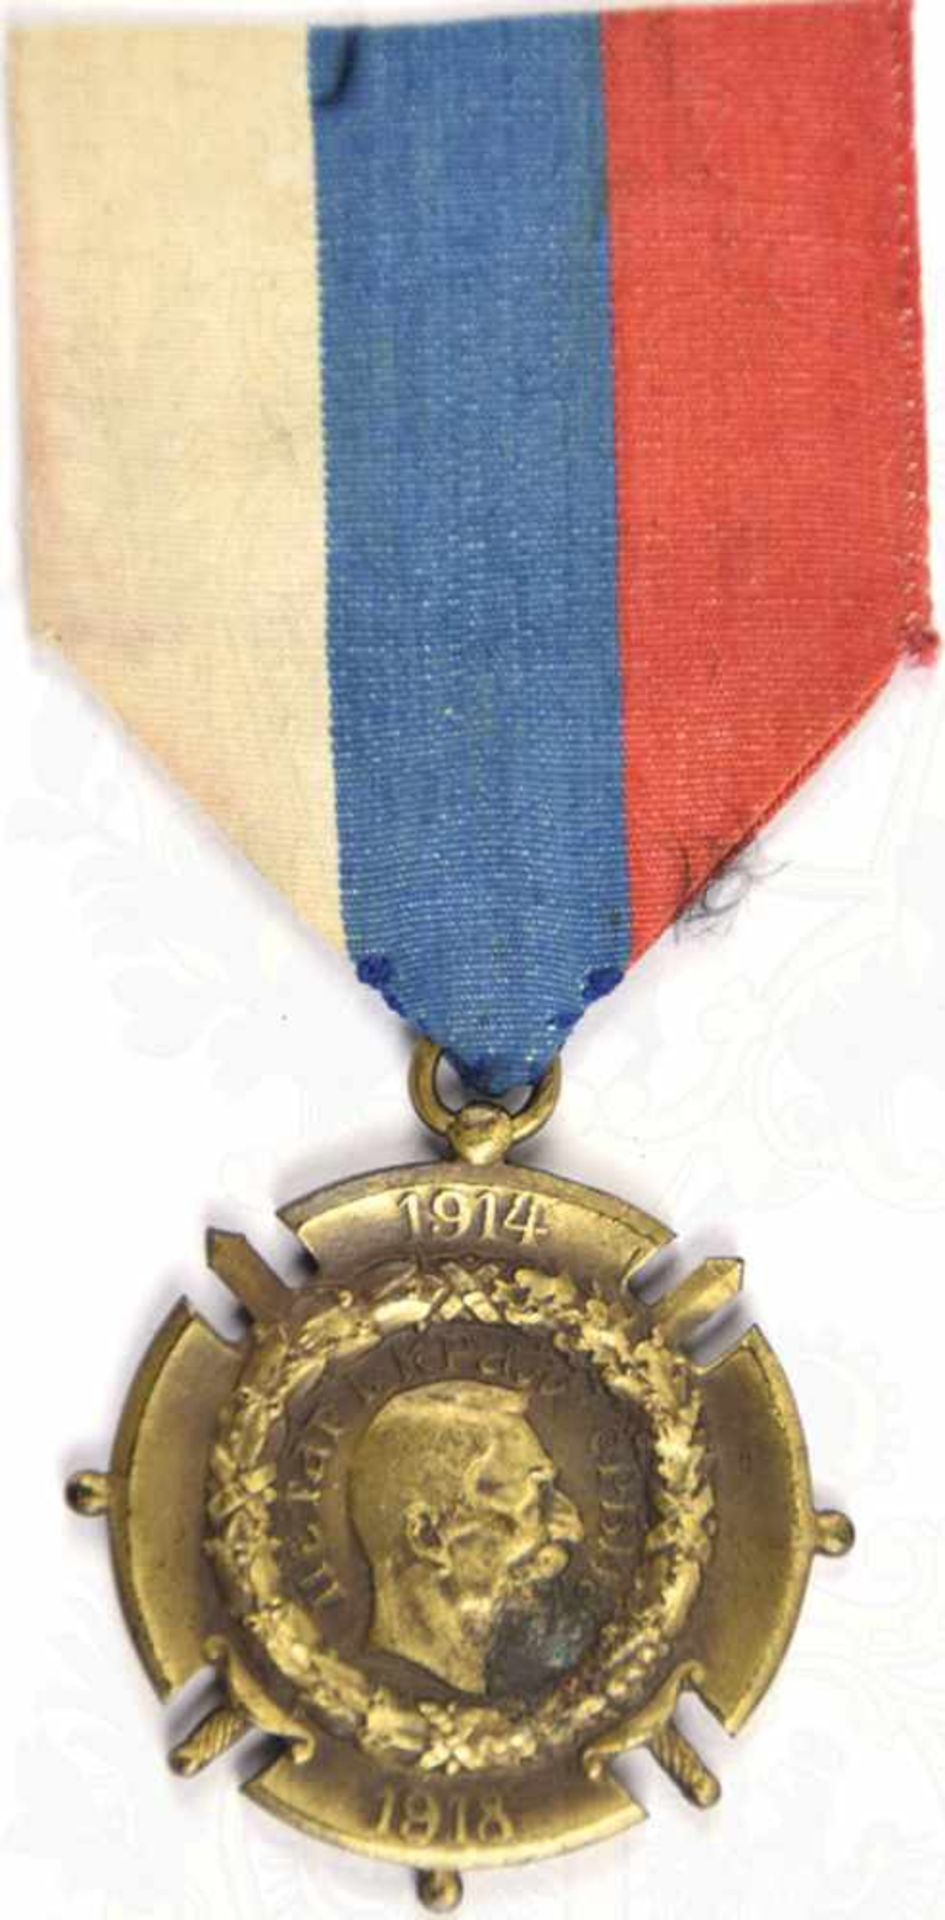 KRIEGS-ERINNERUNGSMEDAILLE 1914-1918, Königreich Serbien, Bronze, gedunkelt, am Band